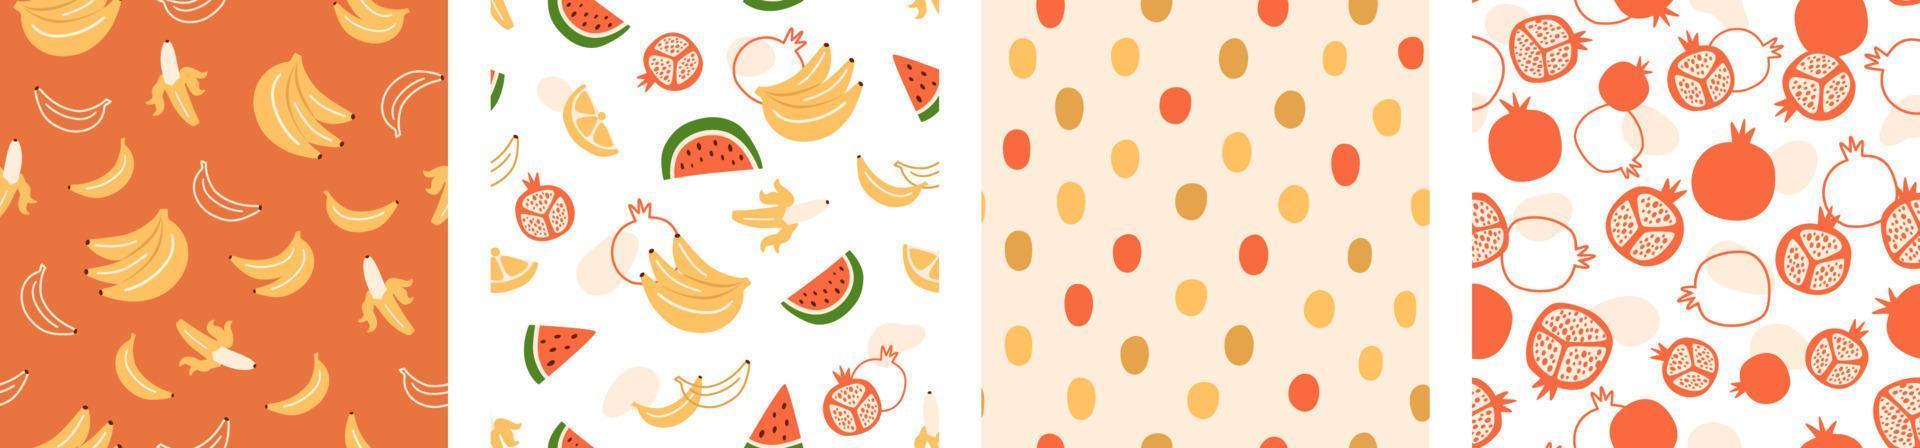 Fruits pattern set. Exotic summer fruits background. Pomegranate, banana, lemon, watermelon, polka dot shapes seamless pattern set. Tropic design for paper, cover, fabric print. Vector illustration.